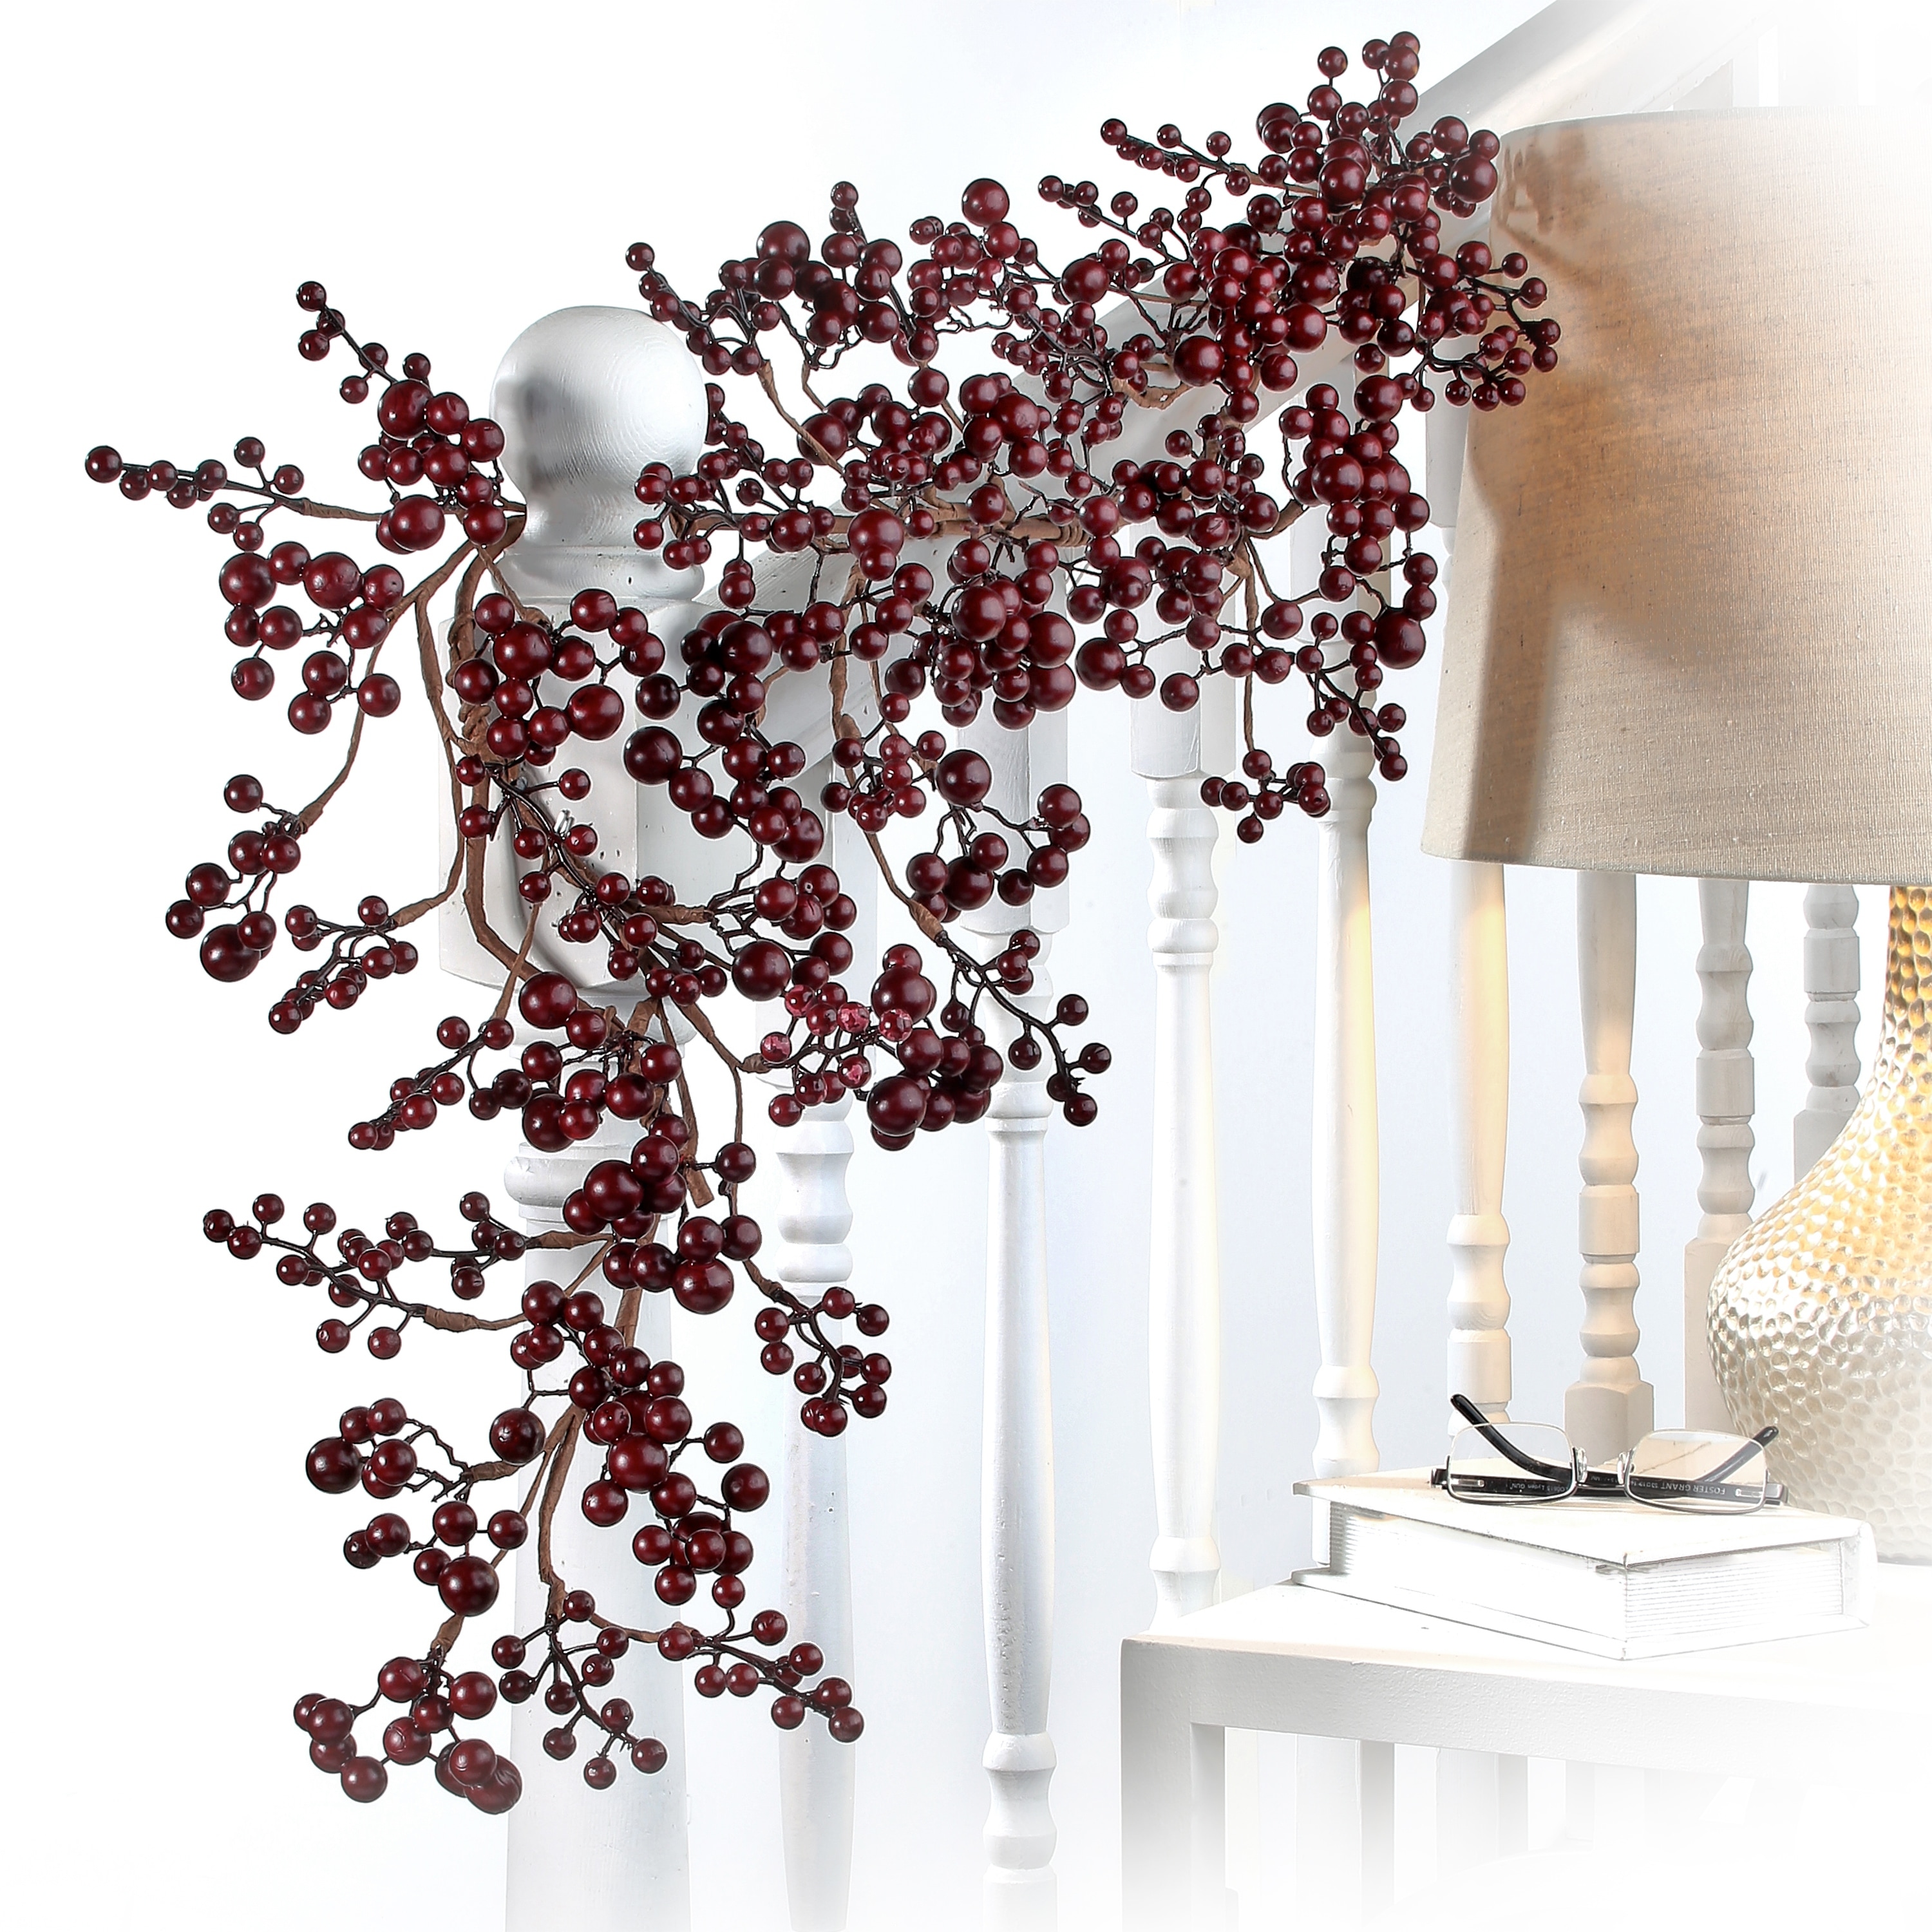 6' x 8 Burgundy Red Berry Artificial Christmas Garland- Unlit